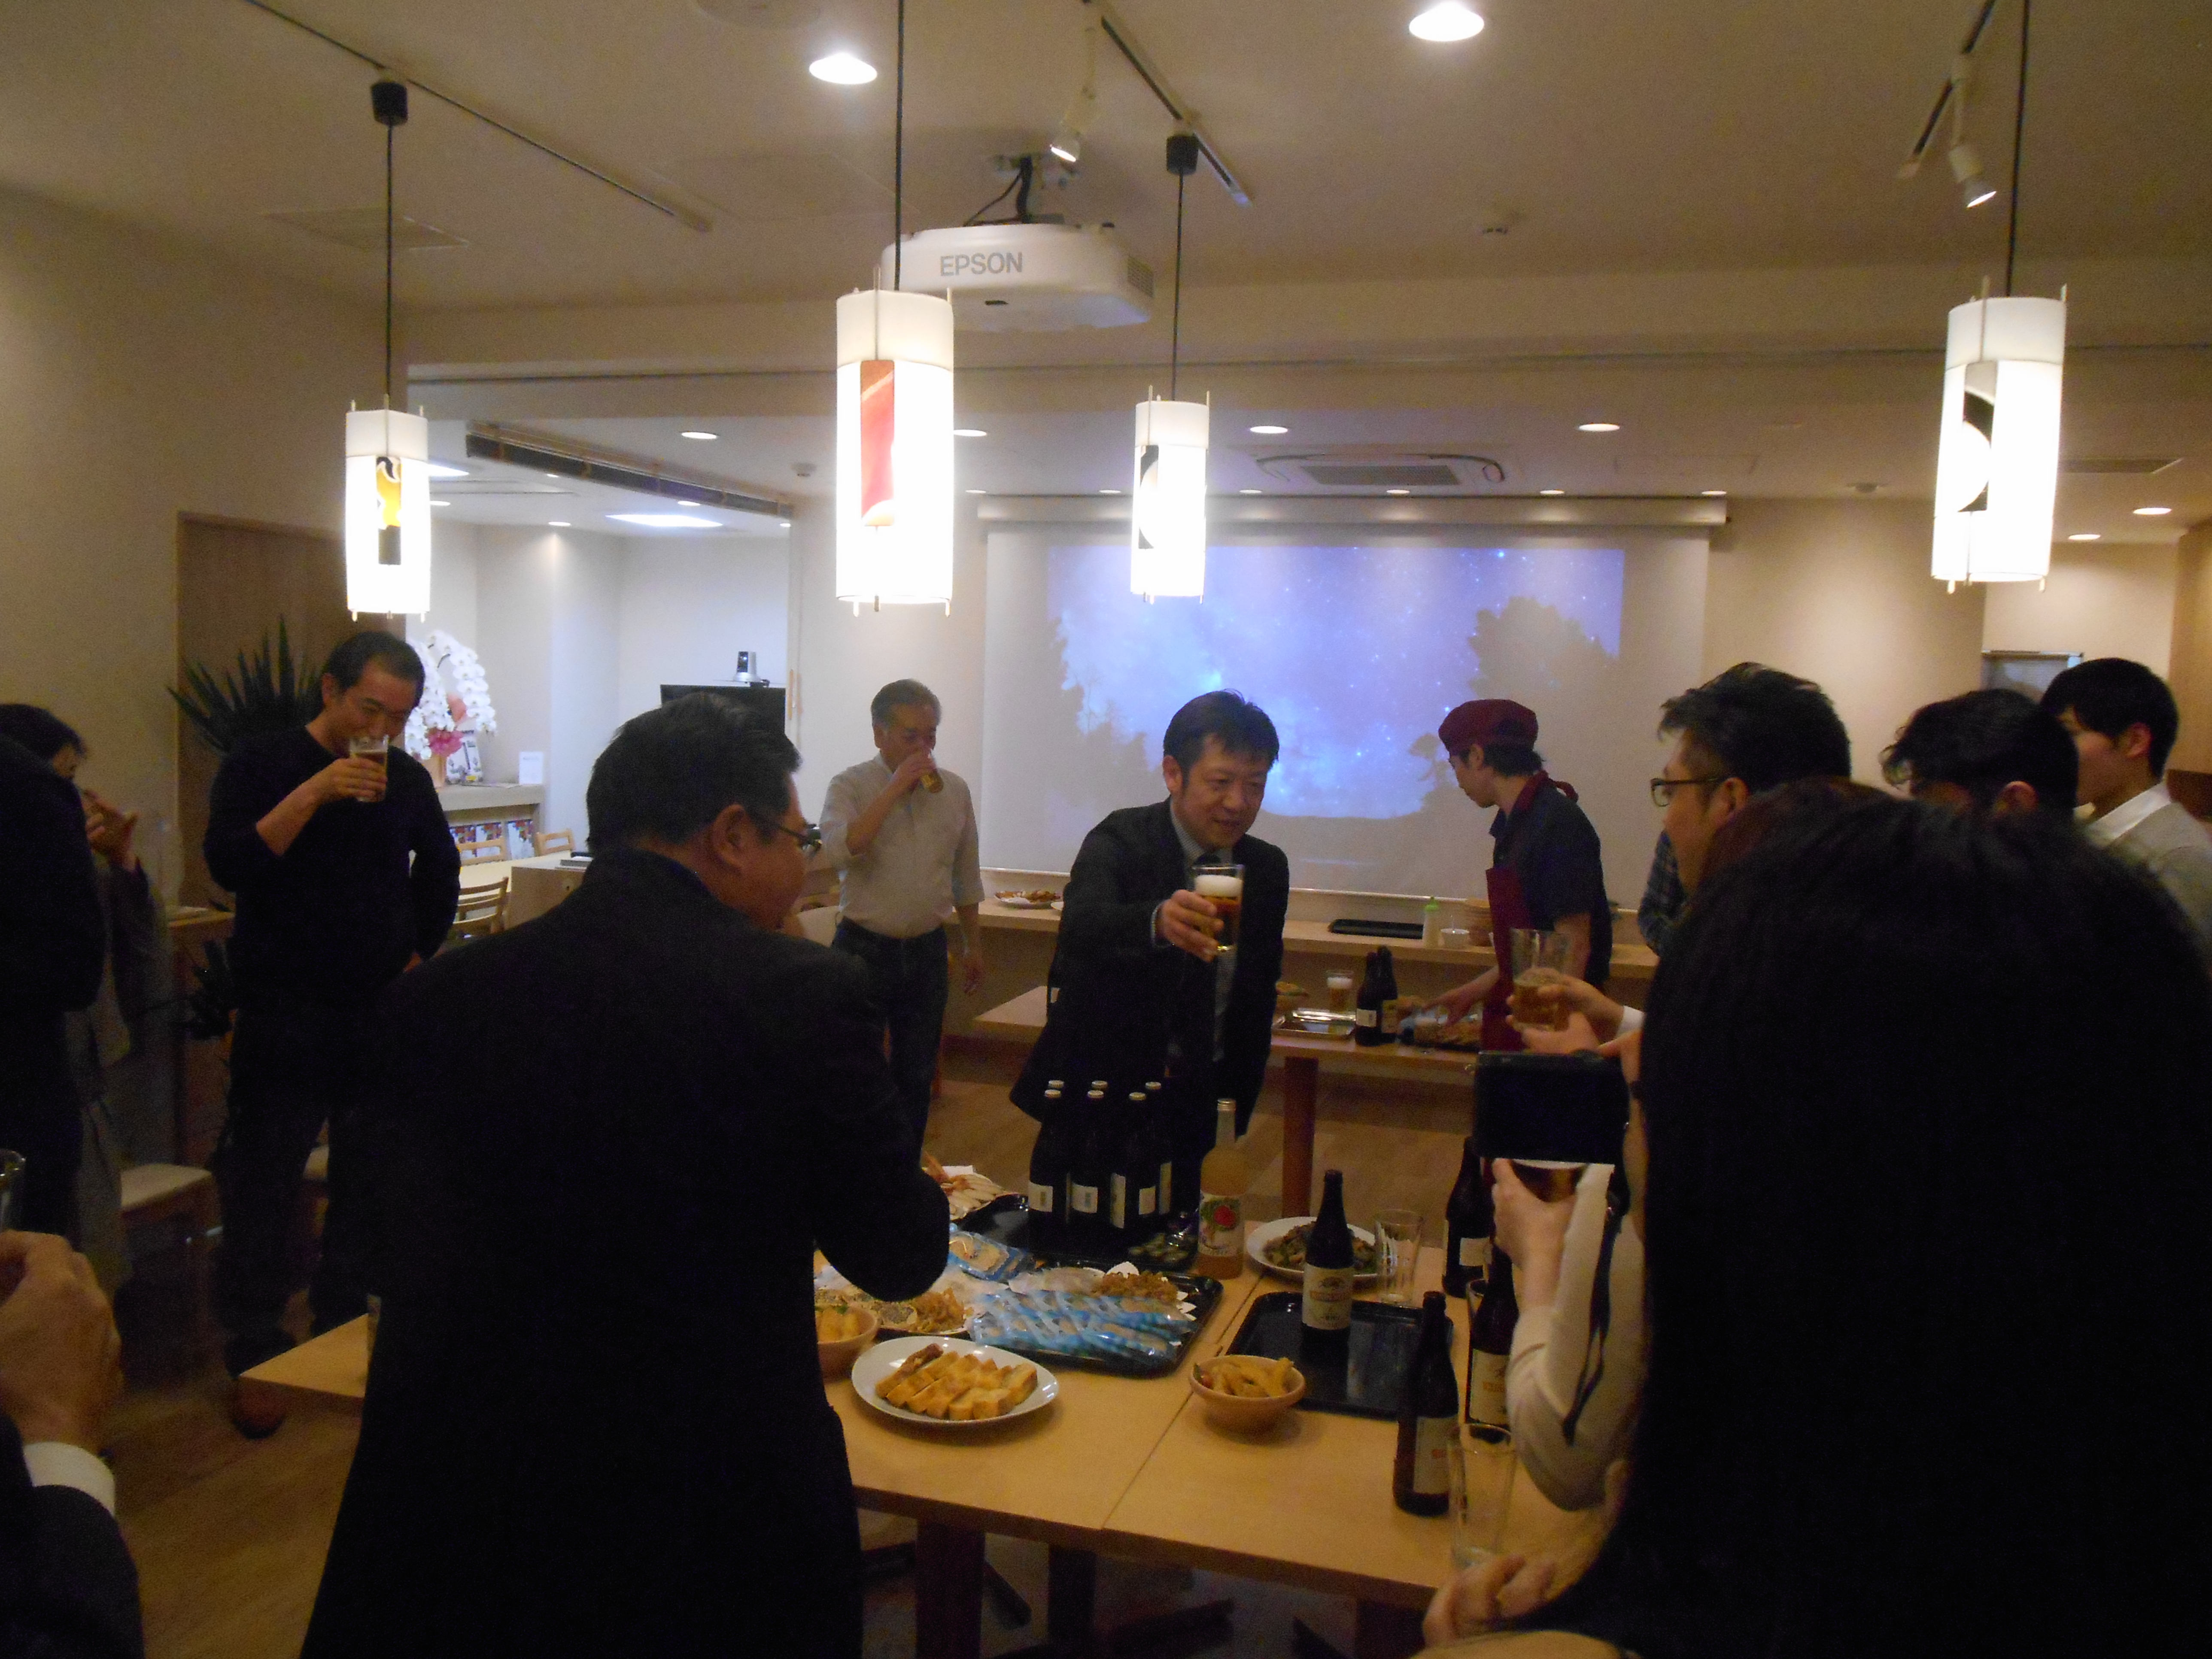 DSCN1592 1 - AoMoLink〜赤坂〜の第2回勉強会&交流会開催します。